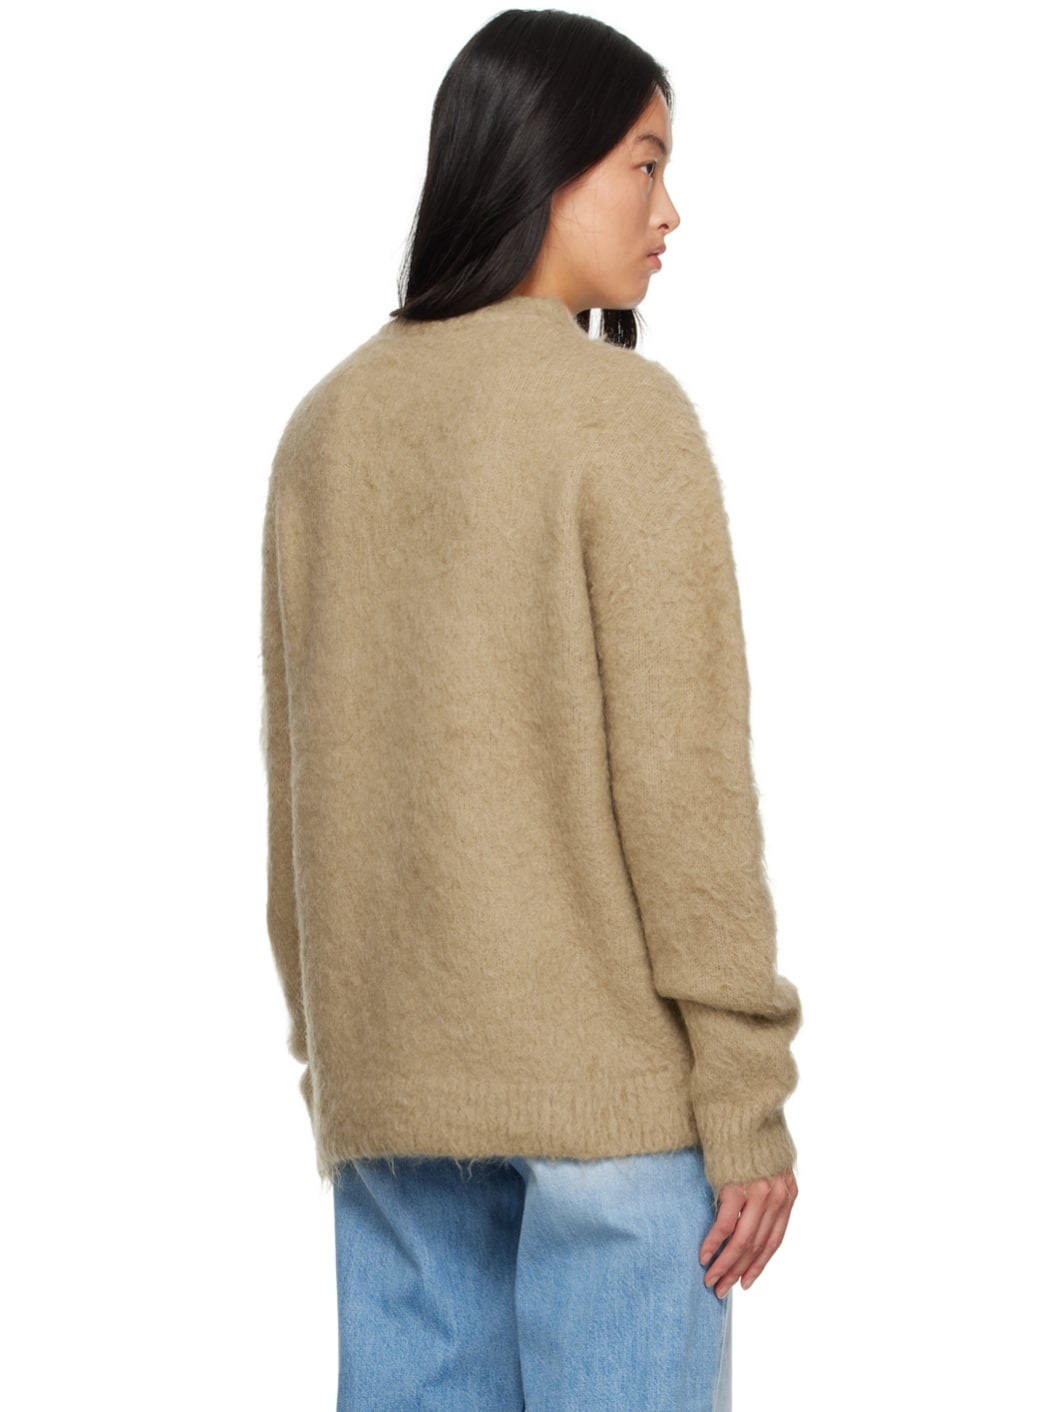 Beige Crewneck Sweater - 3